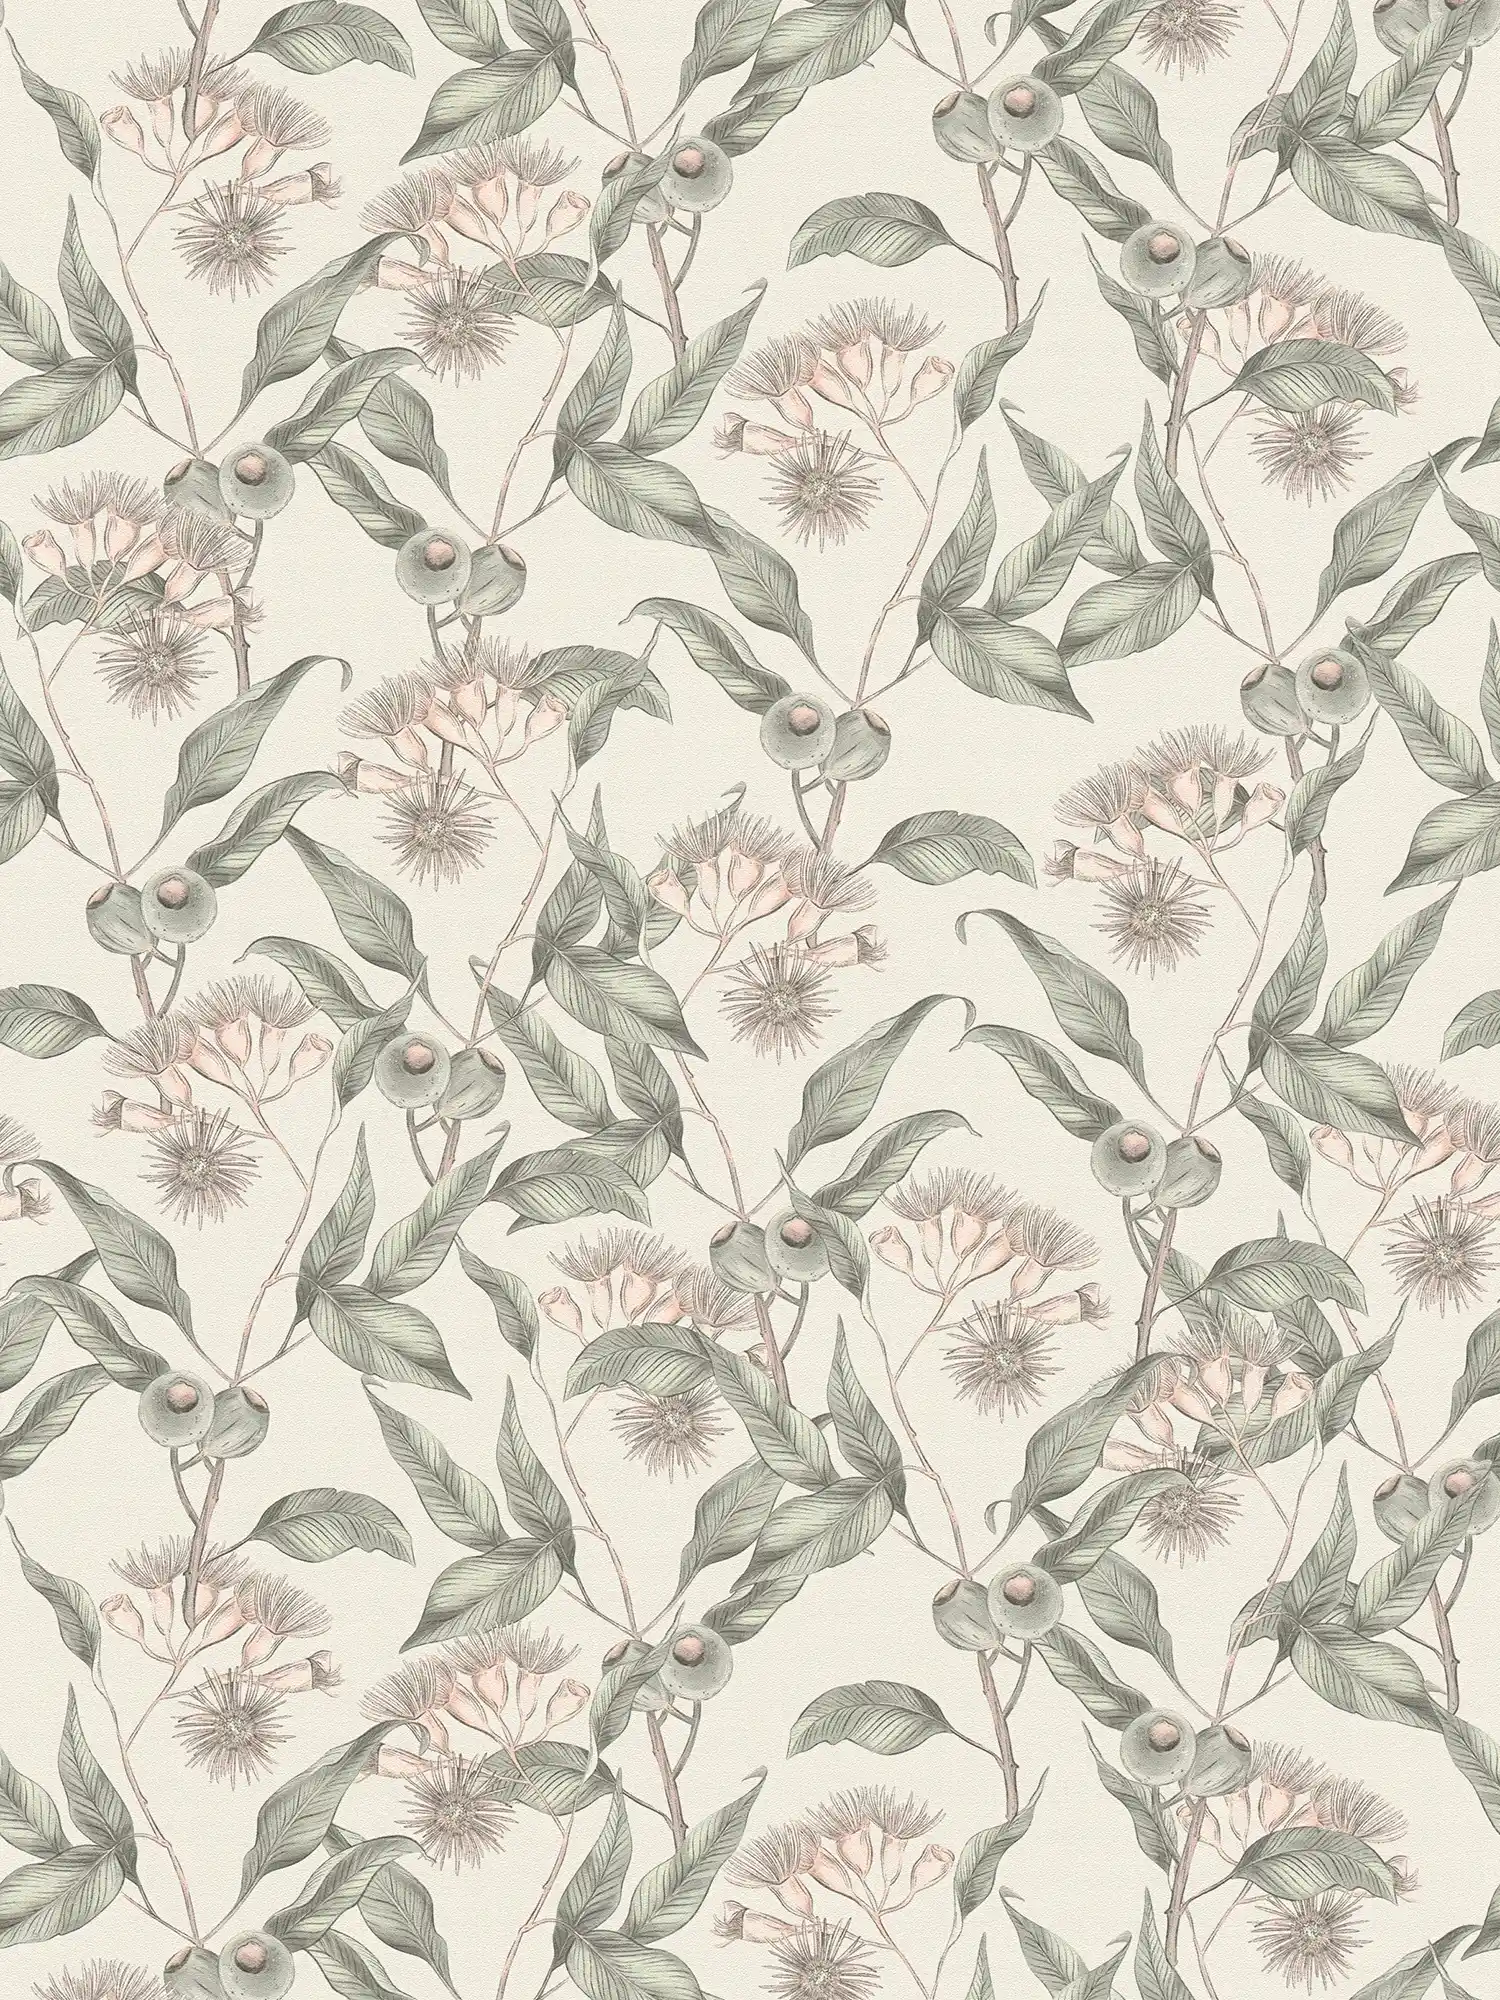 wallpaper floral with leaves & flowers modern textured matt - white, grey, green
